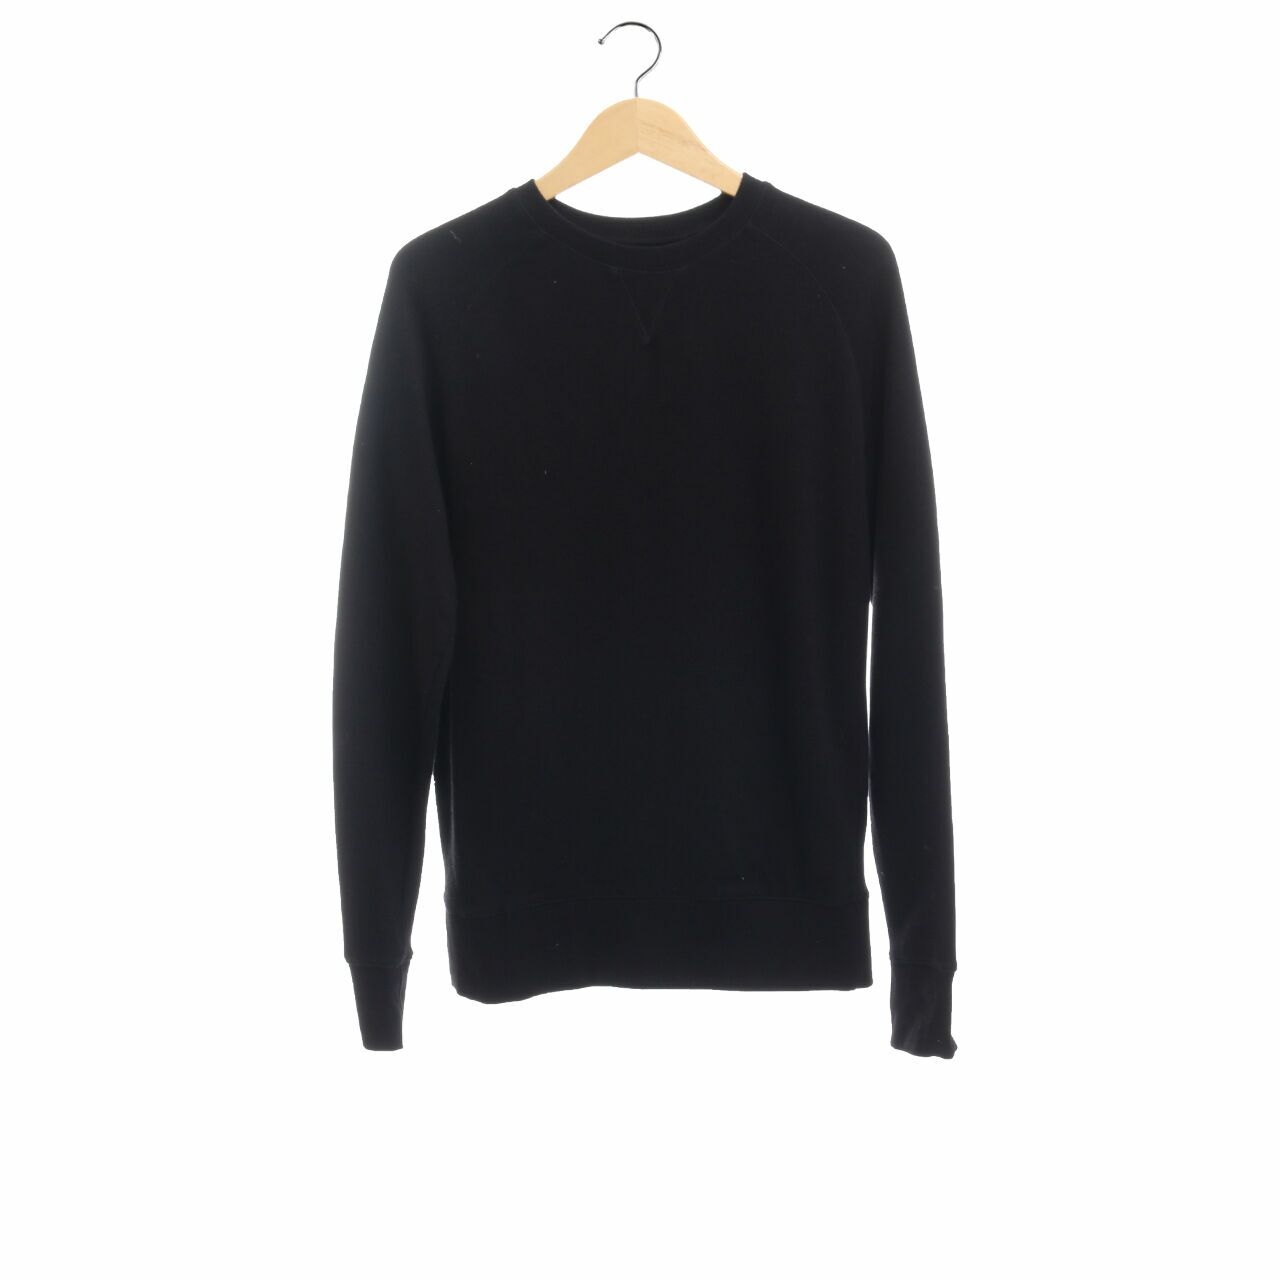 Eleven Paris Black Sweater